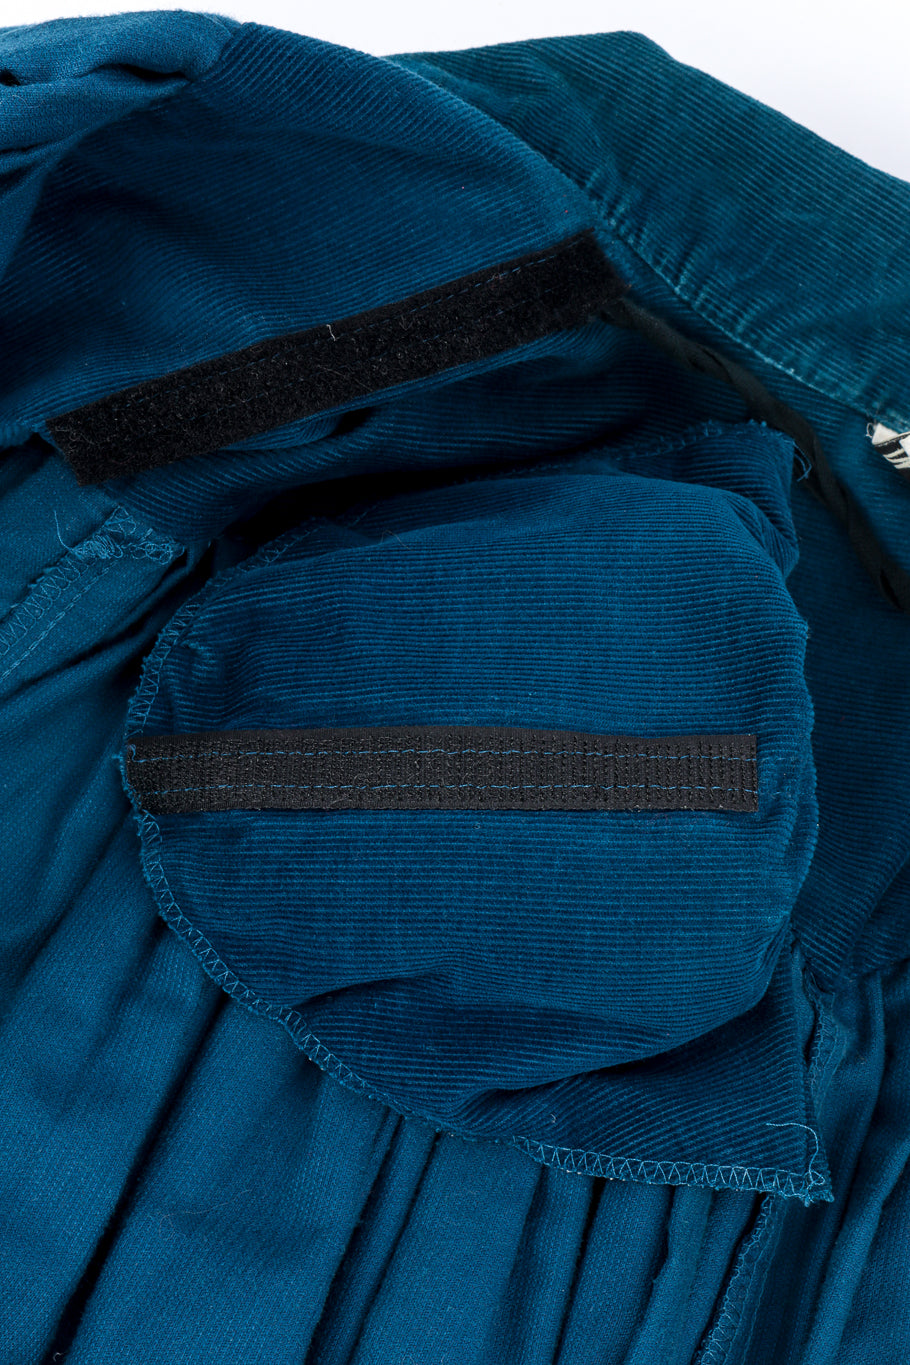 Pleated Corduory Jacket & Skirt Set by Norma Kamali shoulder pad @recess la